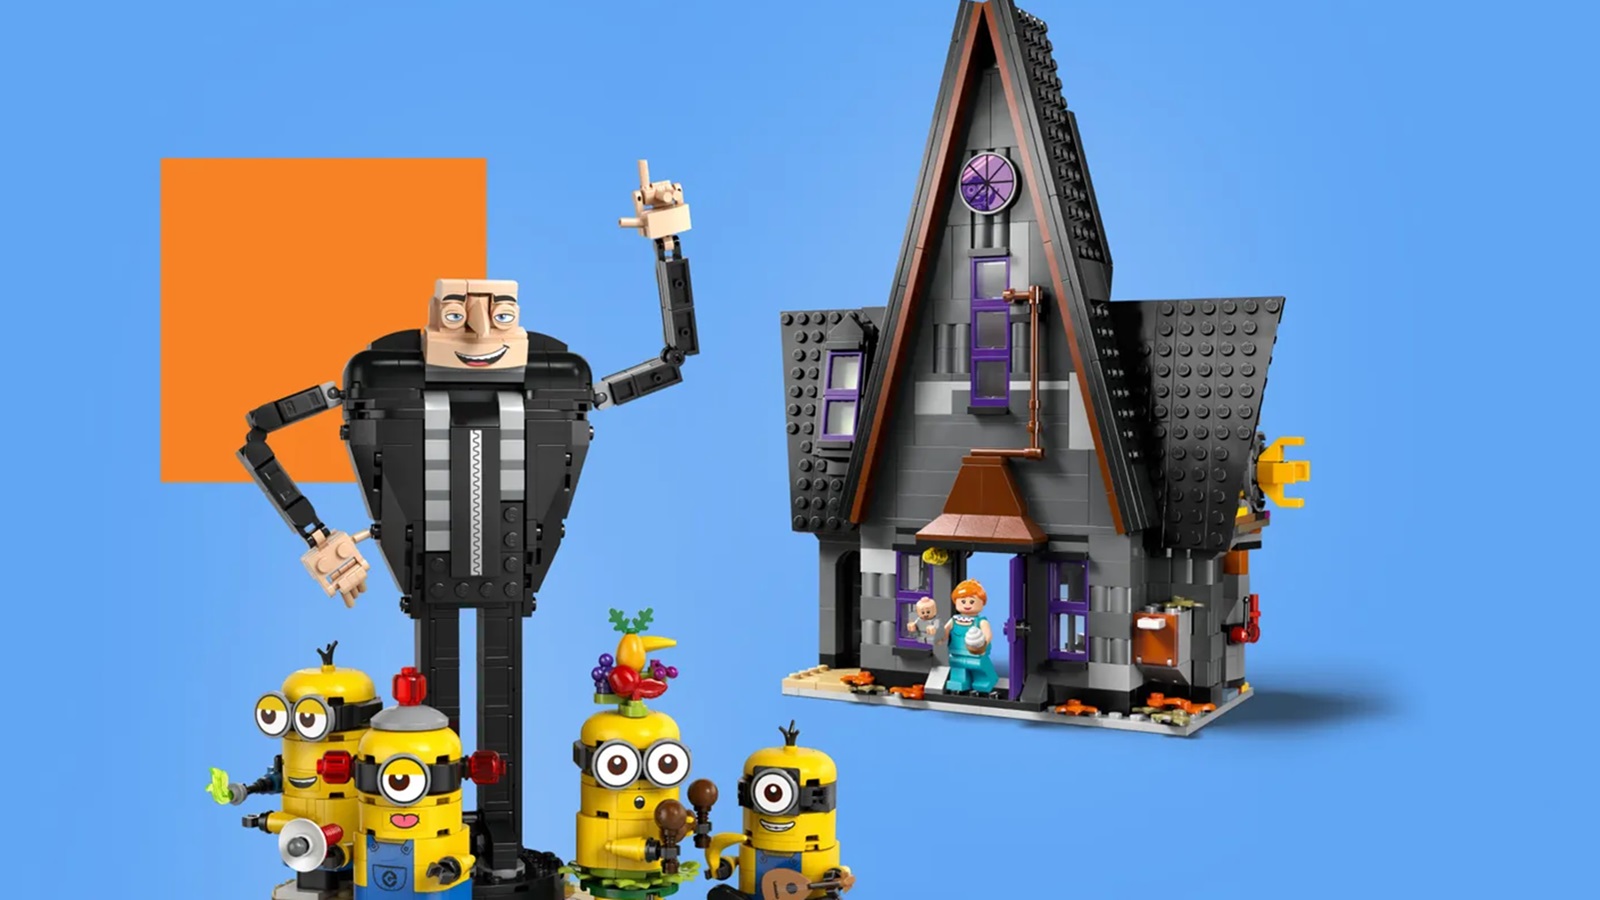 Cattivissimo Me 4: in arrivo nuovi set LEGO ispirati al film